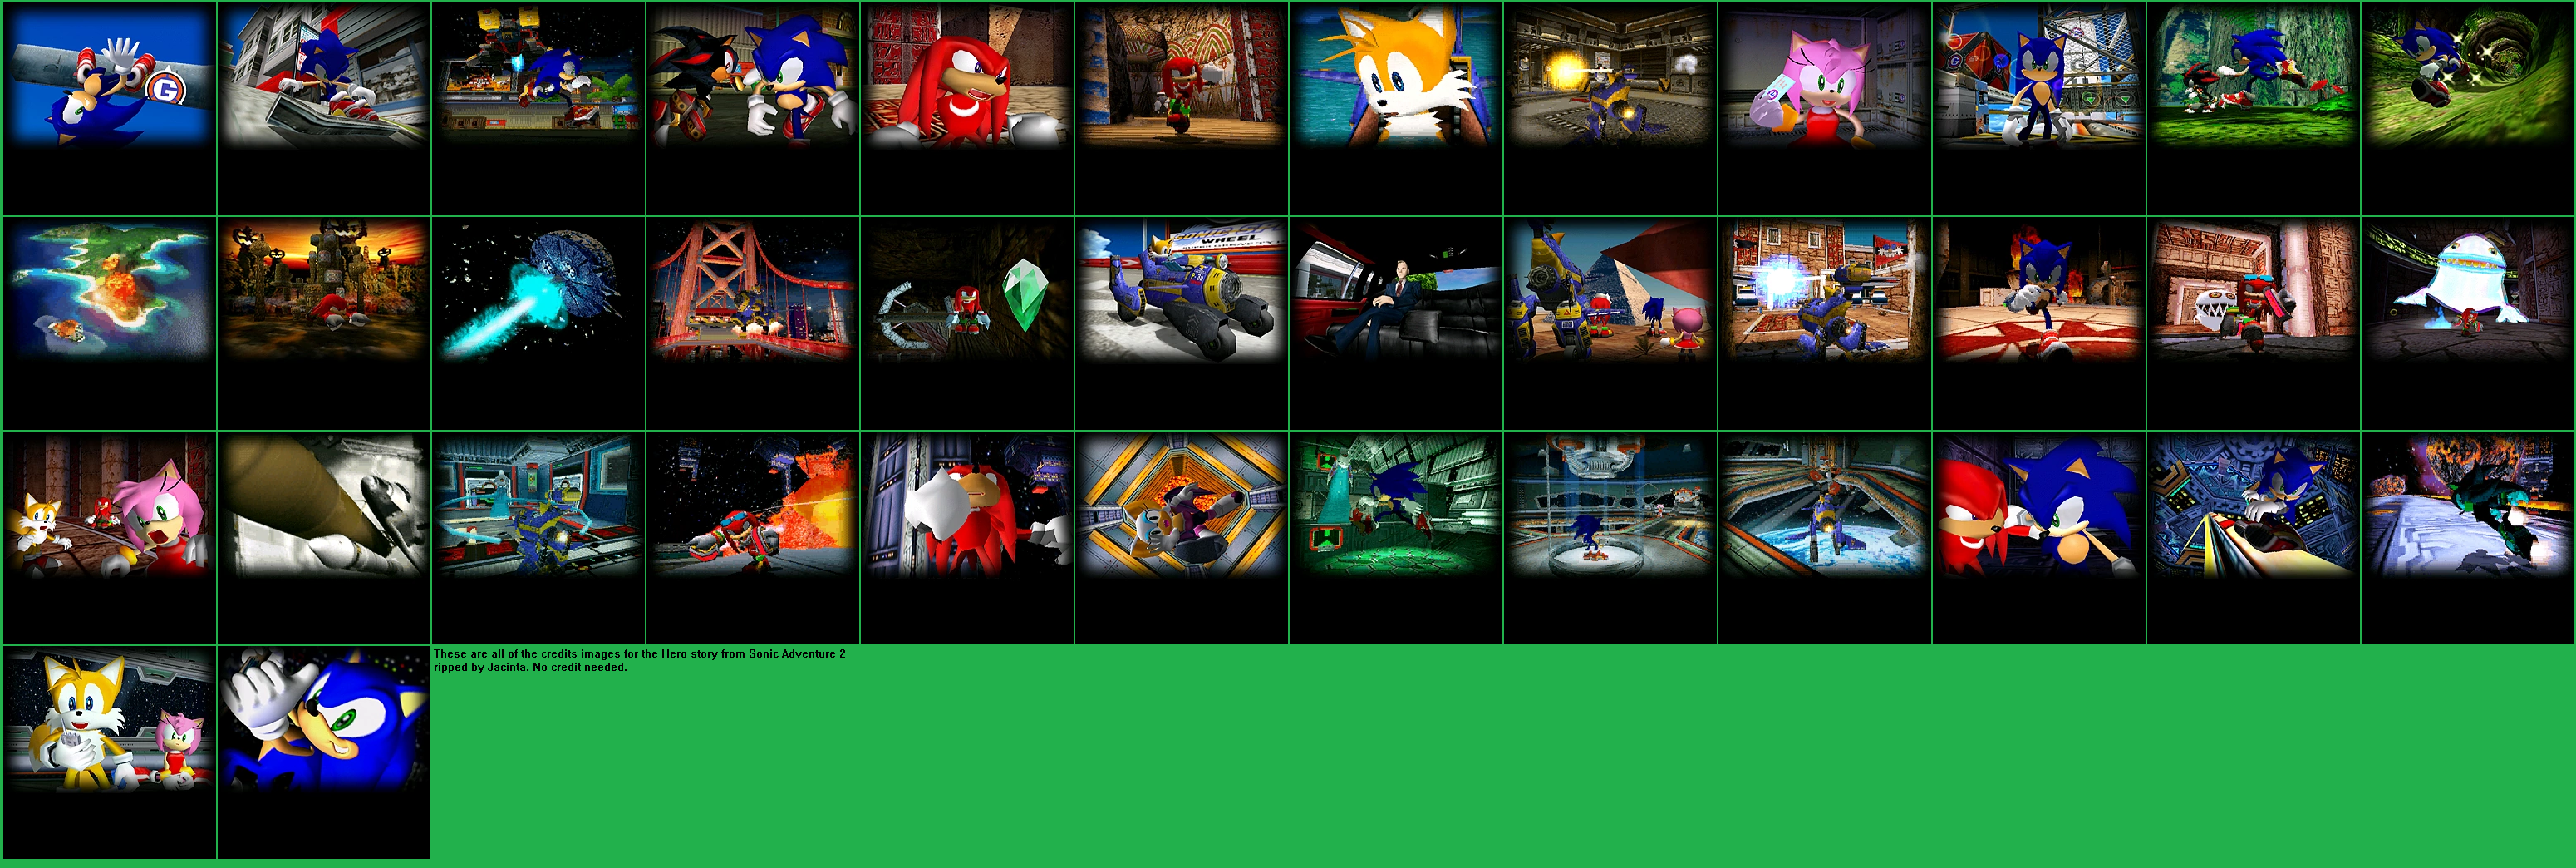 Sonic Adventure 2 - Credits Images (Hero Story)